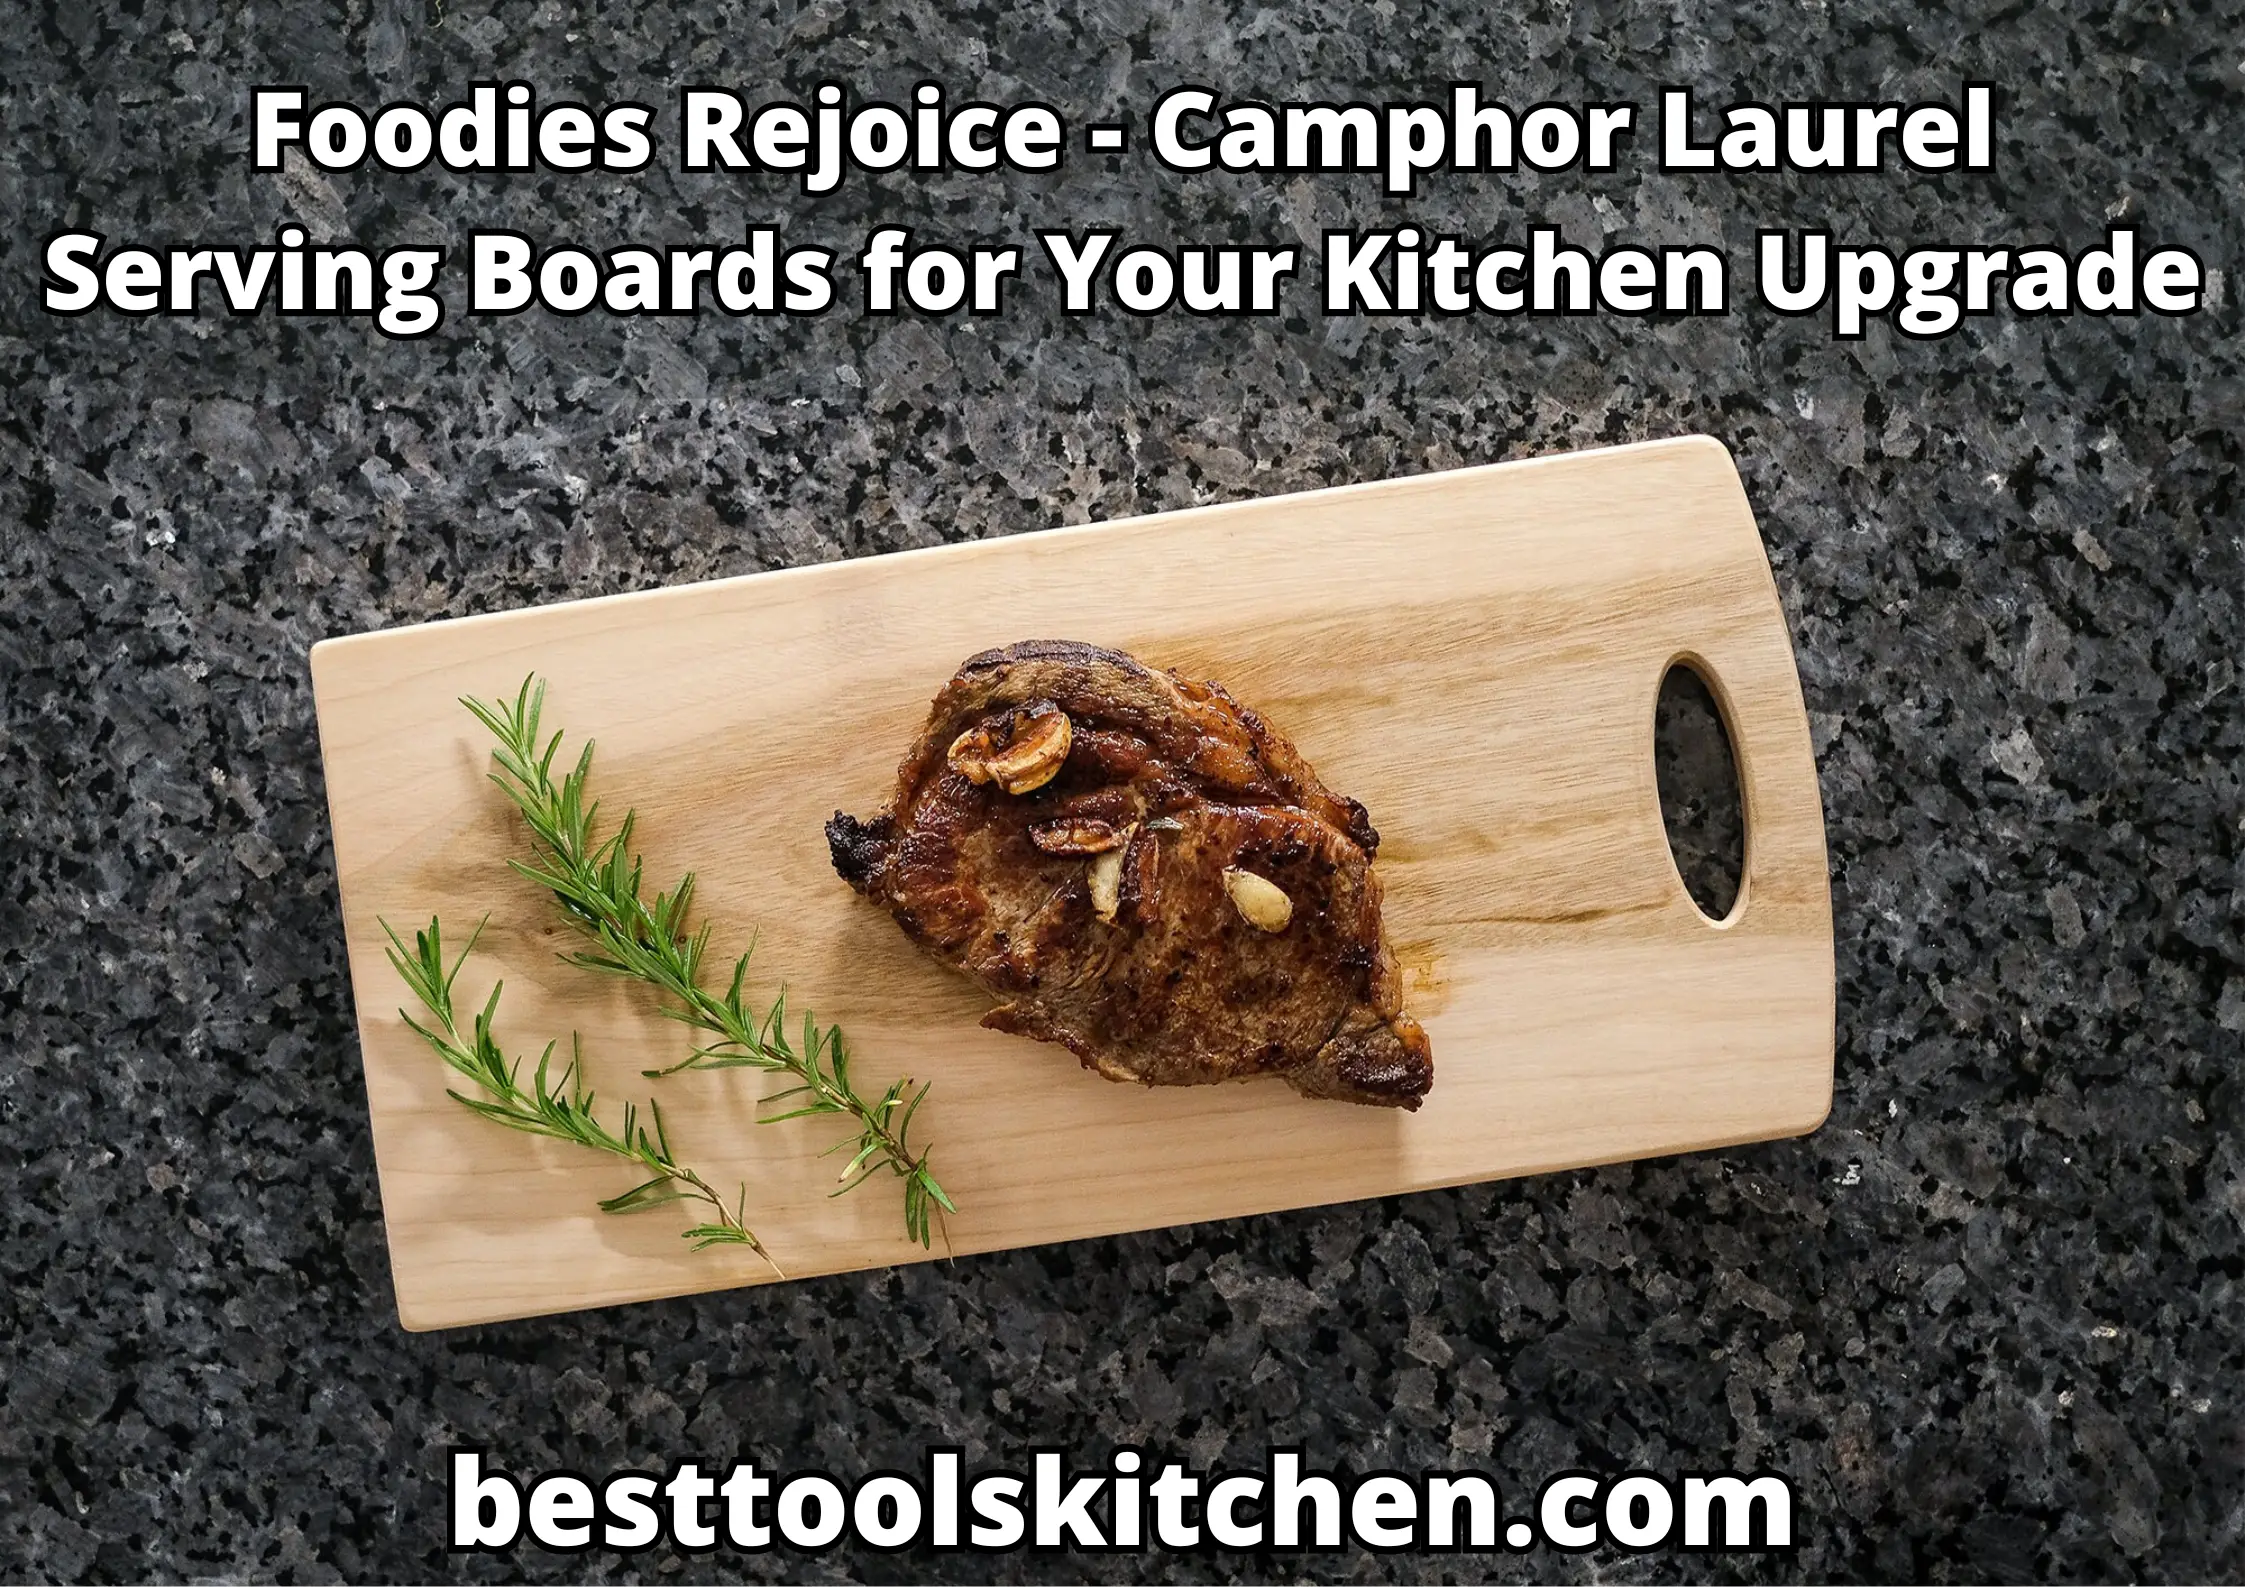 Foodies Rejoice - Camphor Laurel Serving Boards for Your Kitchen Upgrade